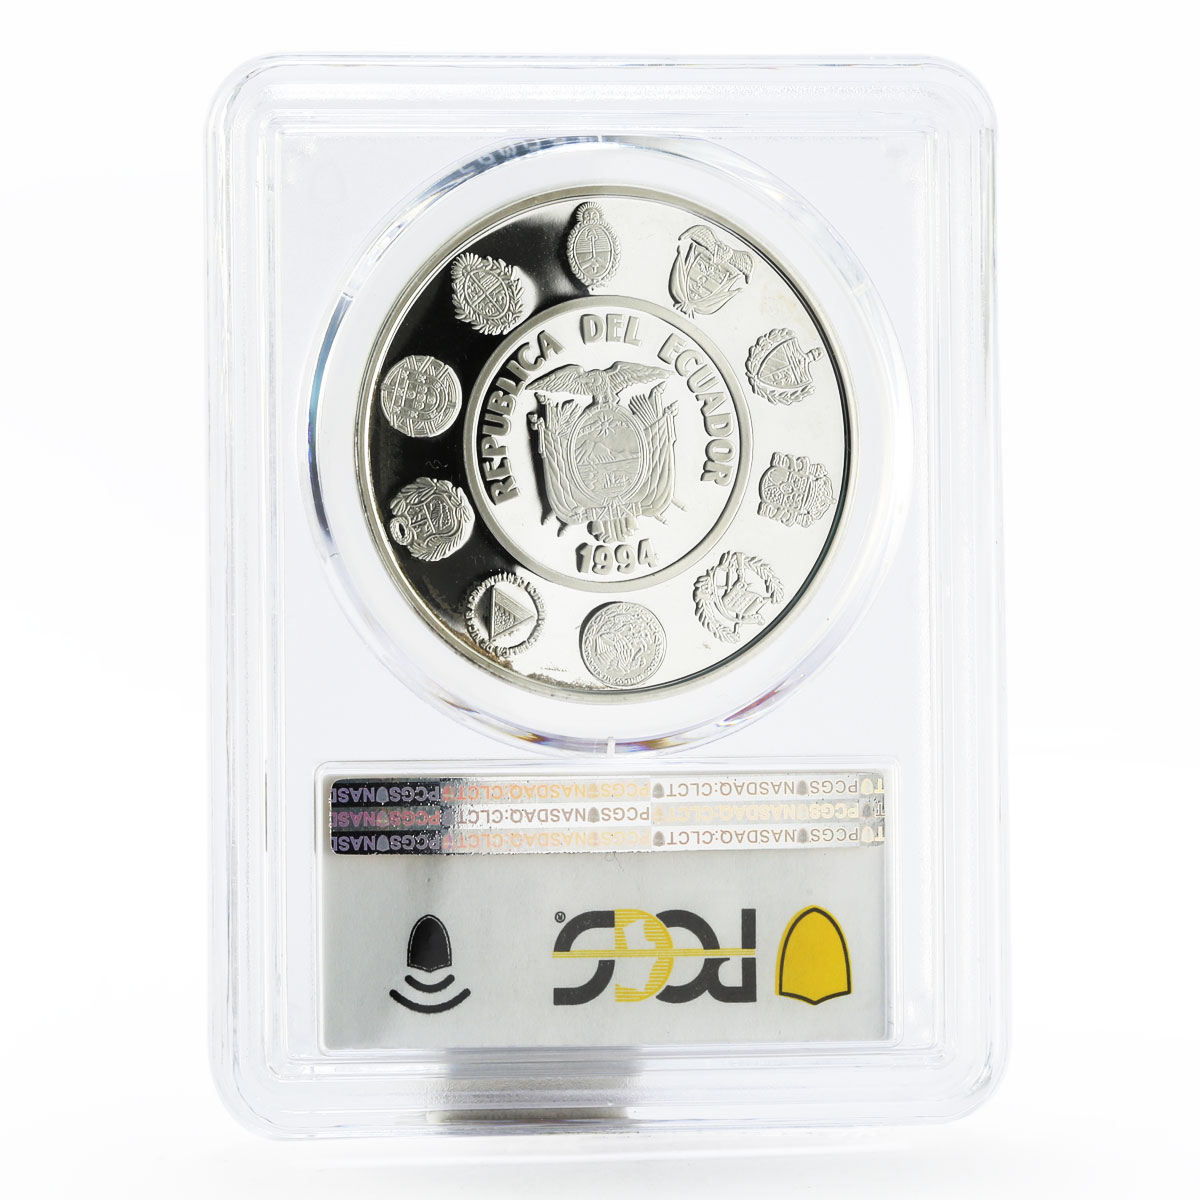 Ecuador 5000 sucres Ibero American series II Penguins PR67 PCGS silver coin 1994